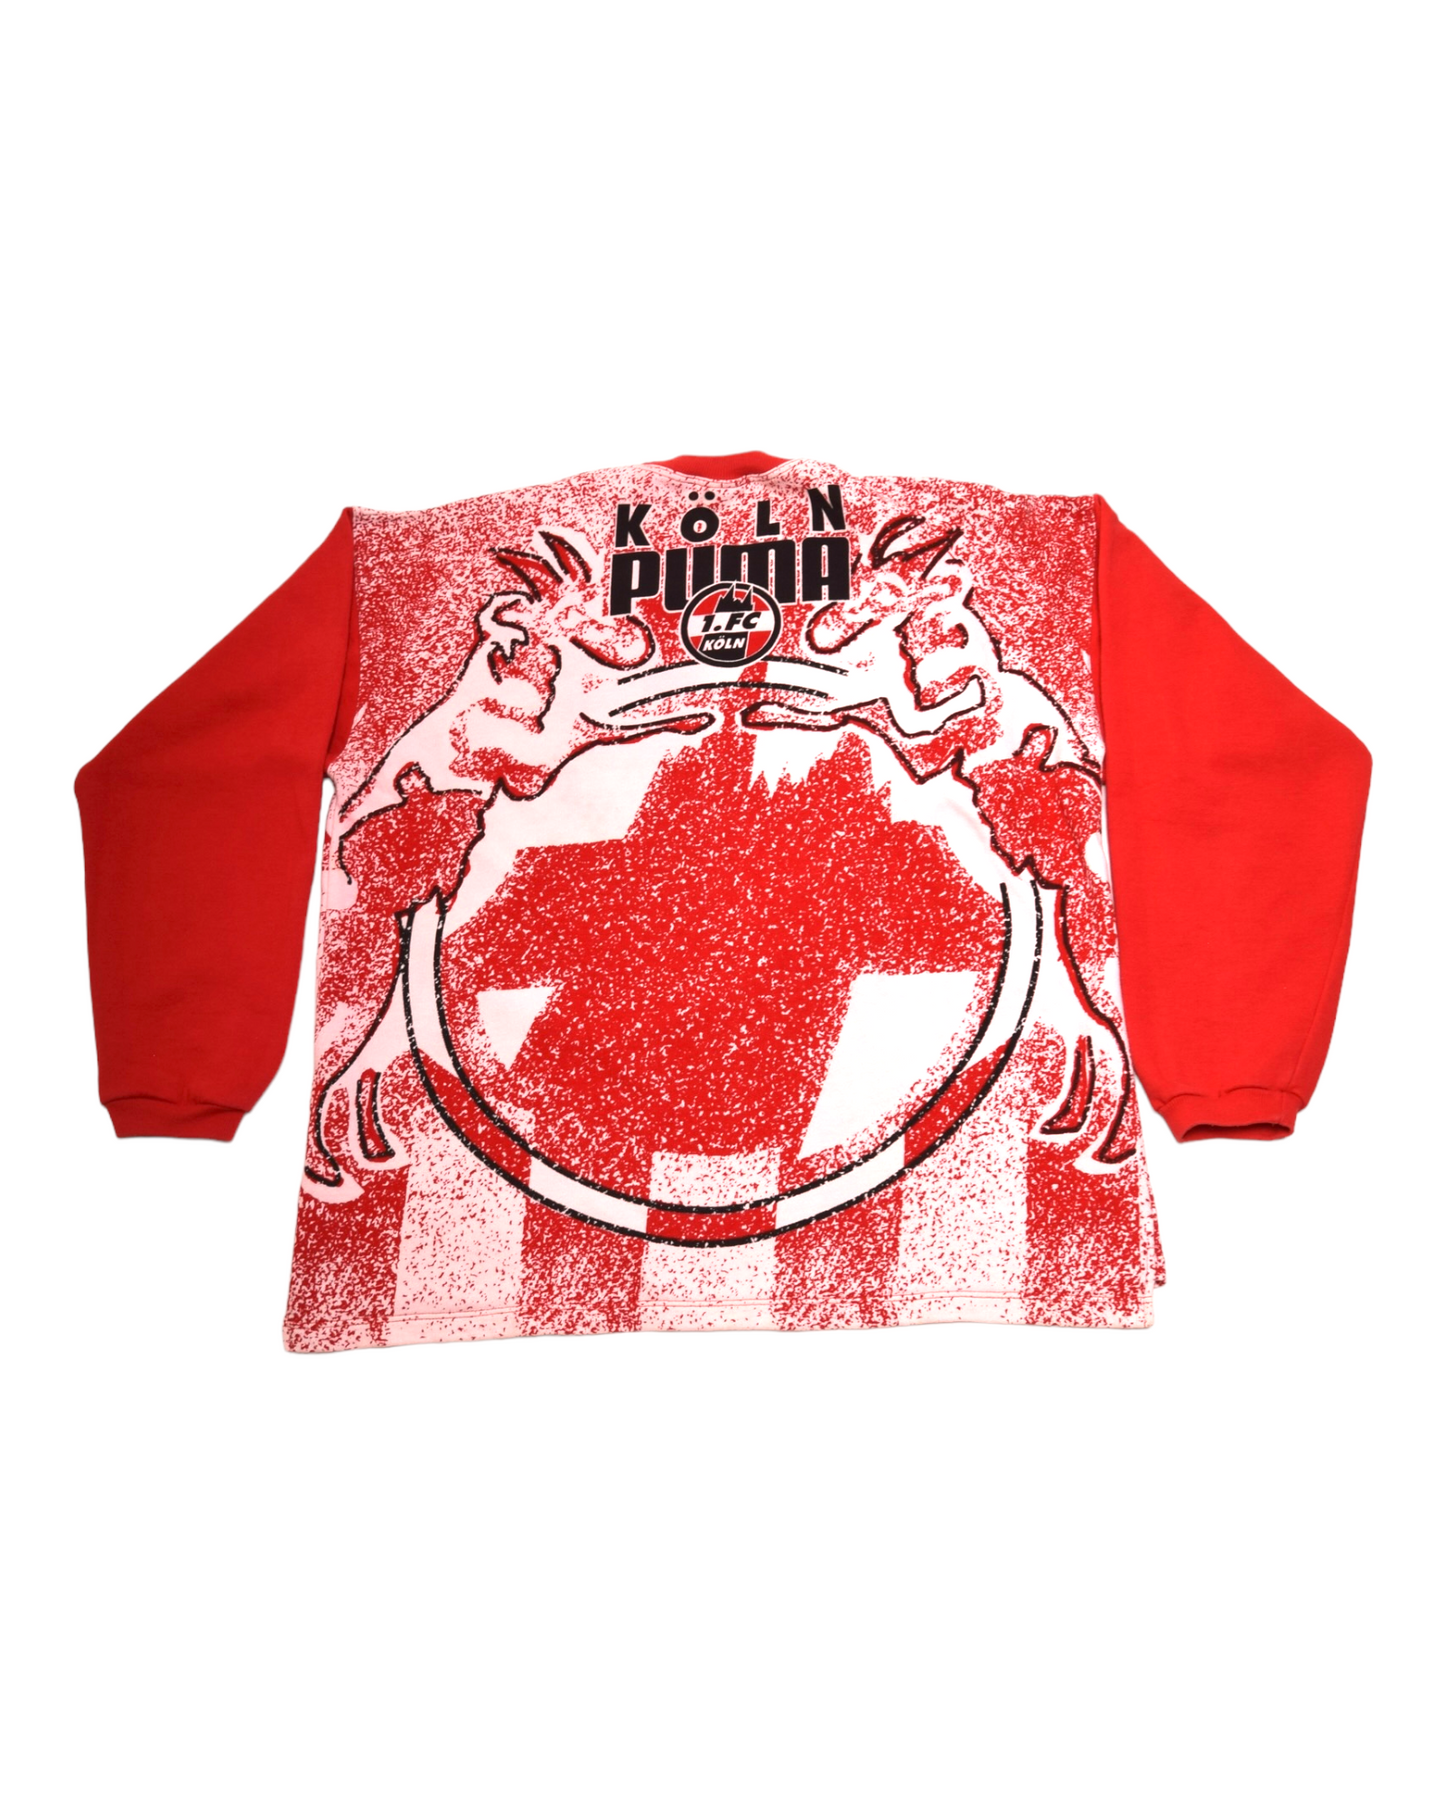 Vintage 90's FC Köln Cologne Puma Sweatshirt Size L Red White